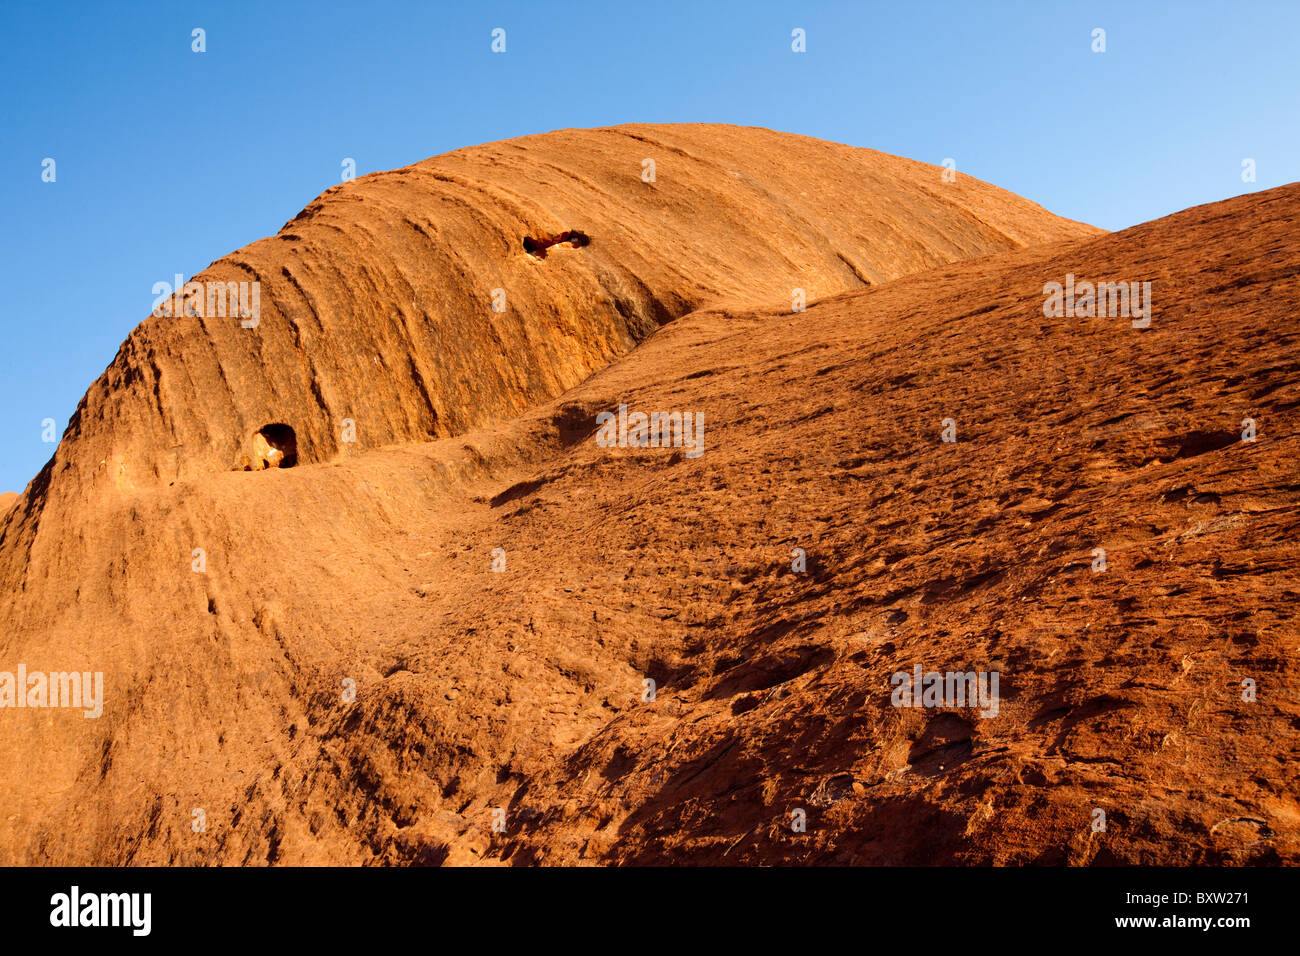 Australien, Northern Territory, Uluru - Kata Tjuta National Park, morgen Sonne leuchten Muster in roten Felsen Basis des Ayers Rock Stockfoto